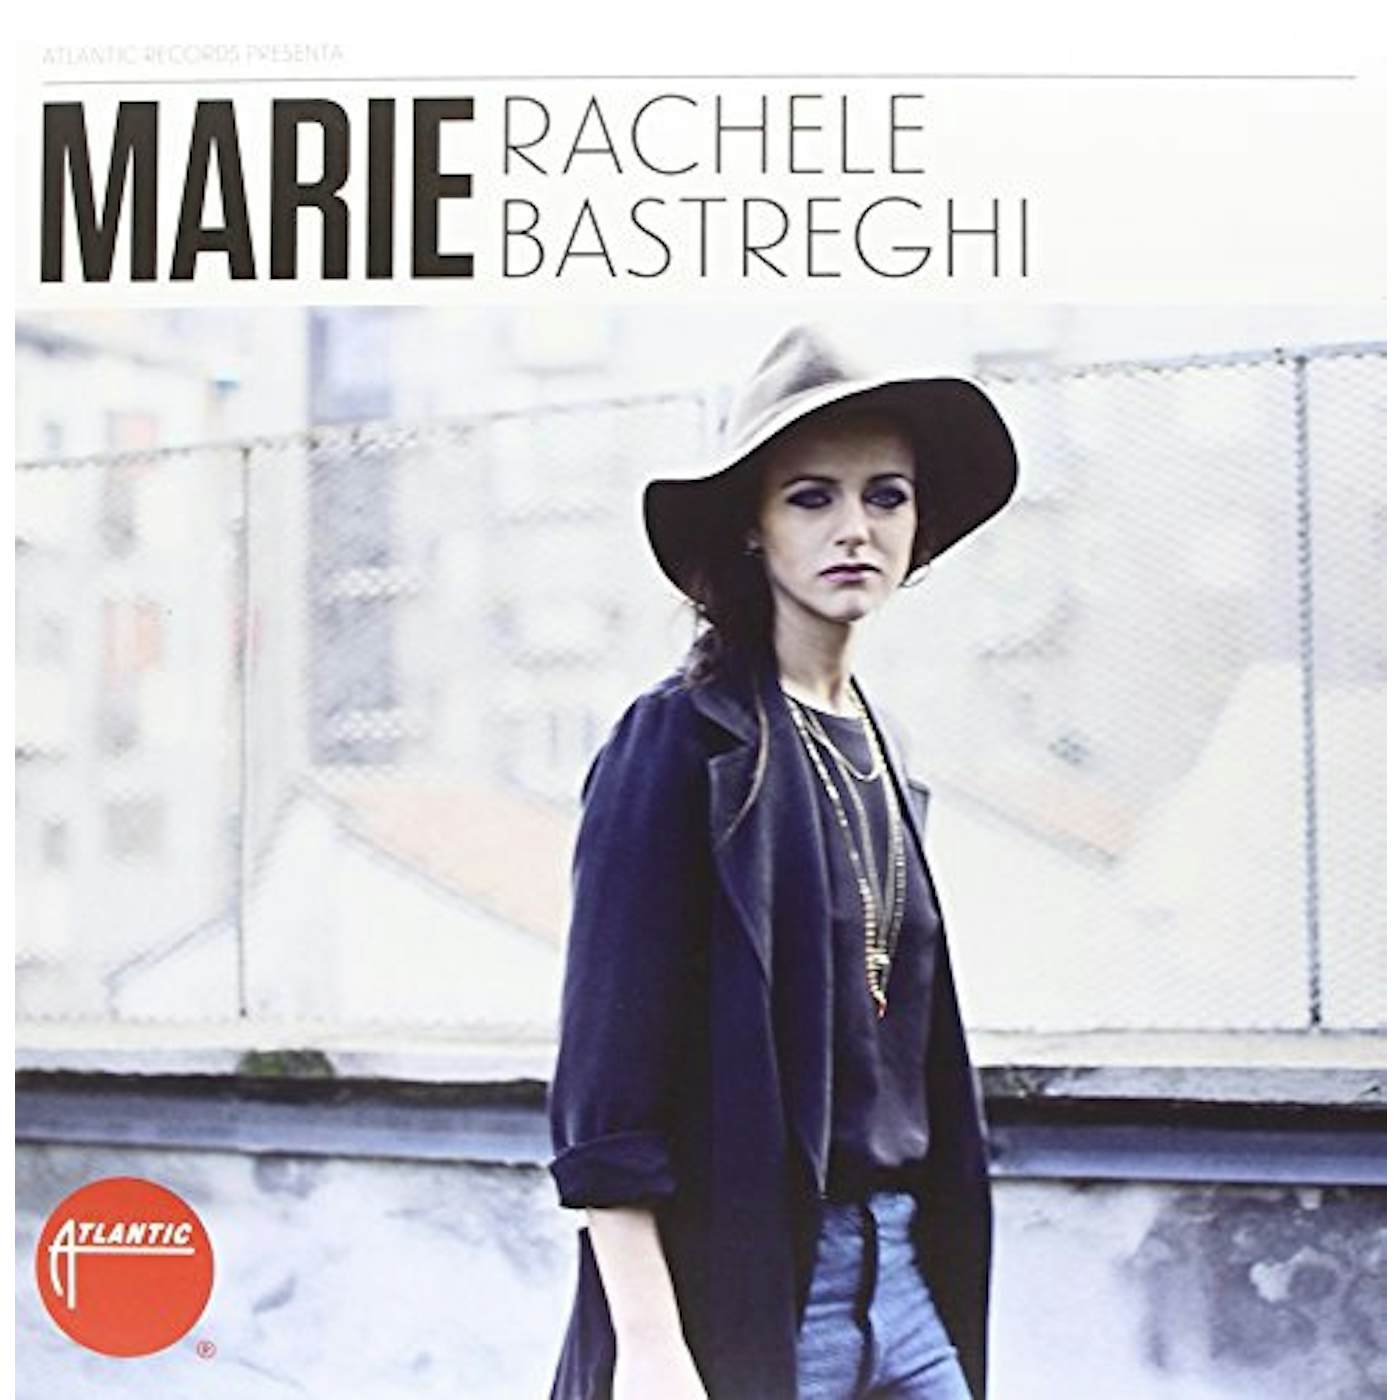 Rachele Bastreghi MARIE Vinyl Record - Italy Release